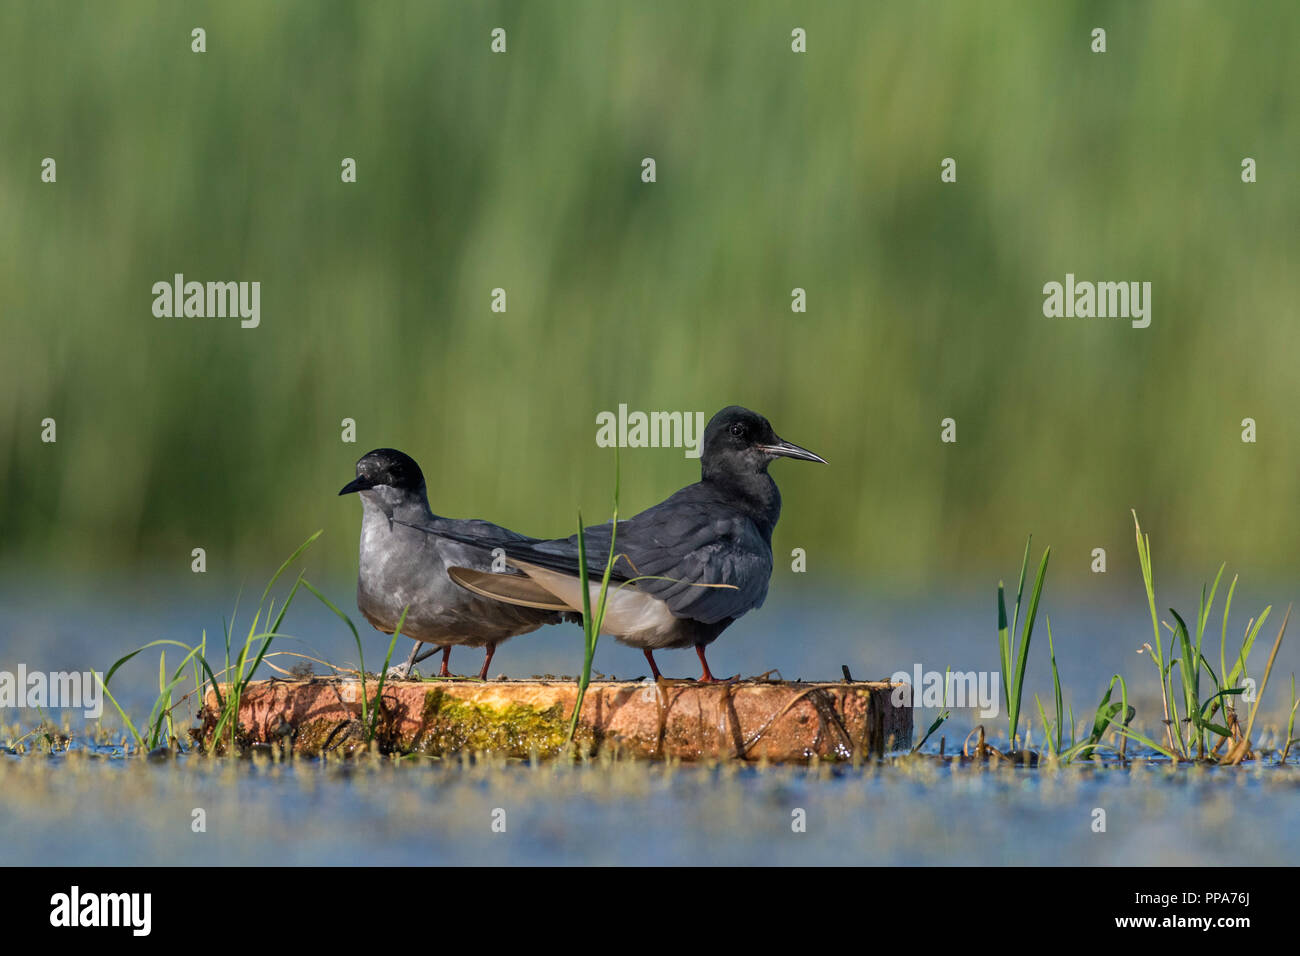 Black tern (Chlidonias niger) pair in breeding plumage on floating artificial nesting platform in pond Stock Photo